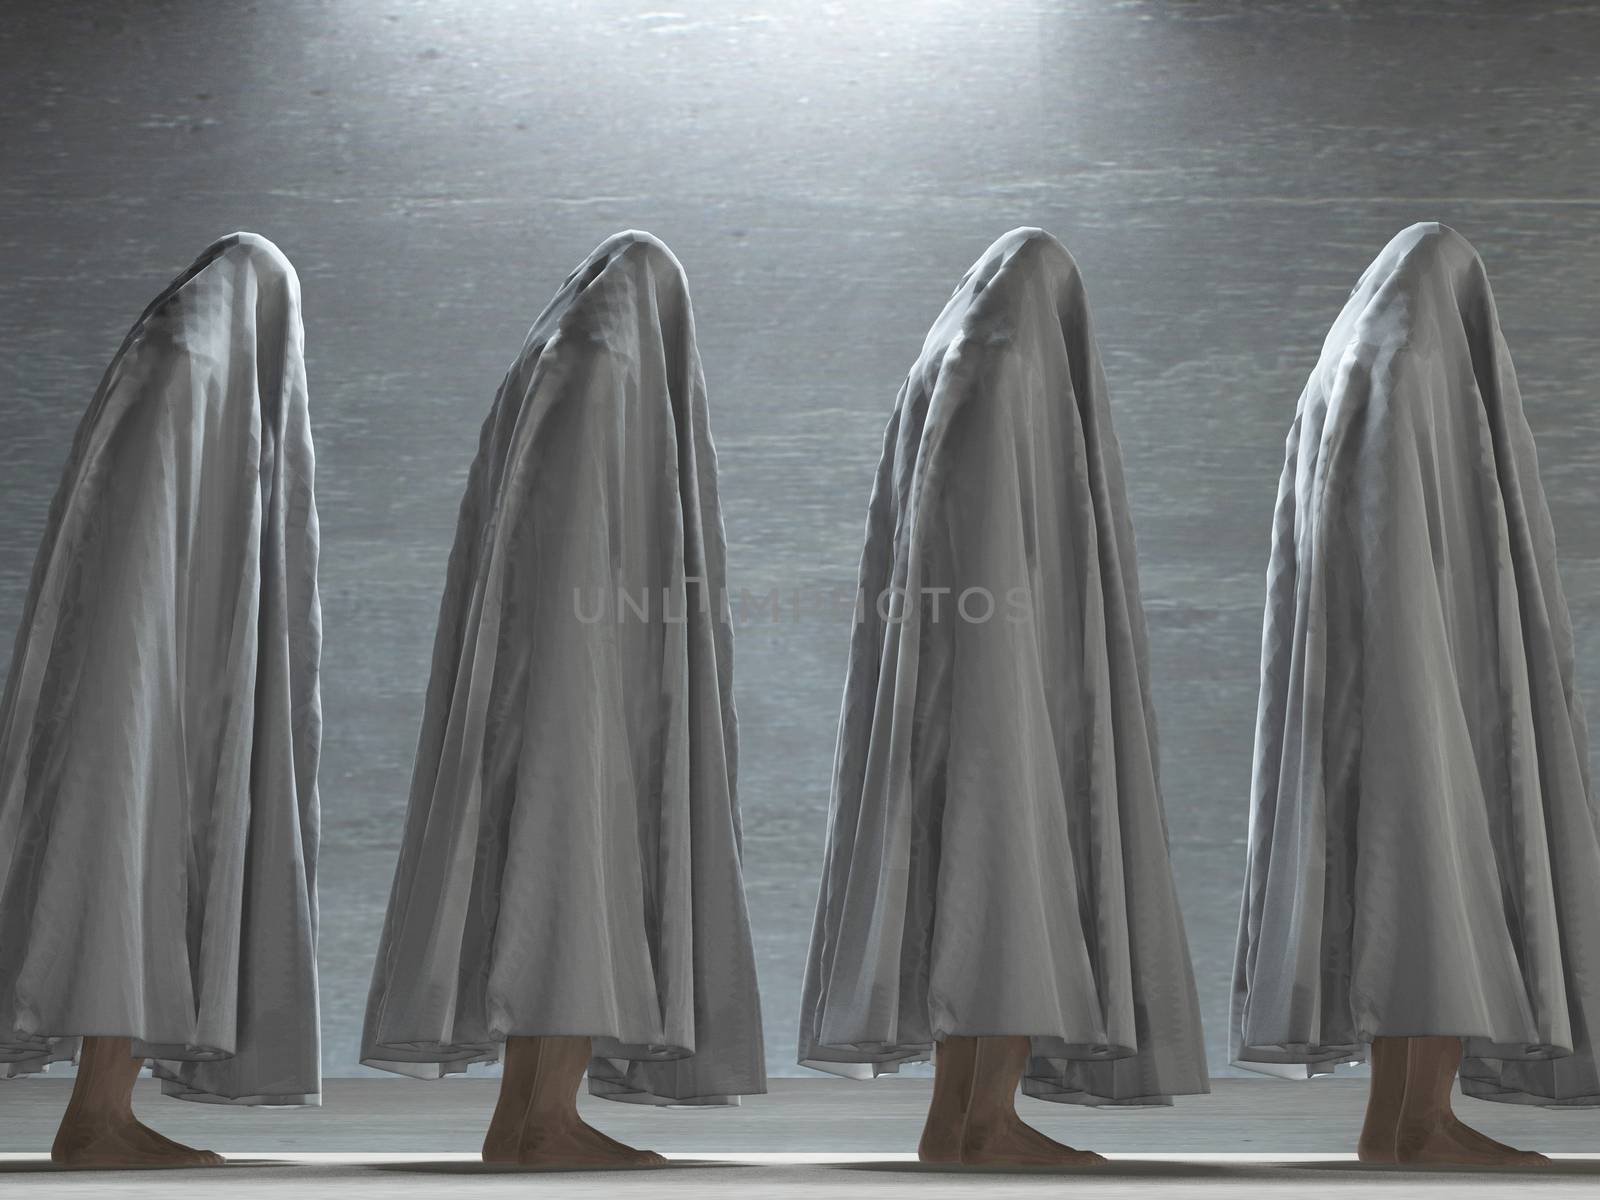 Human figures under cloth